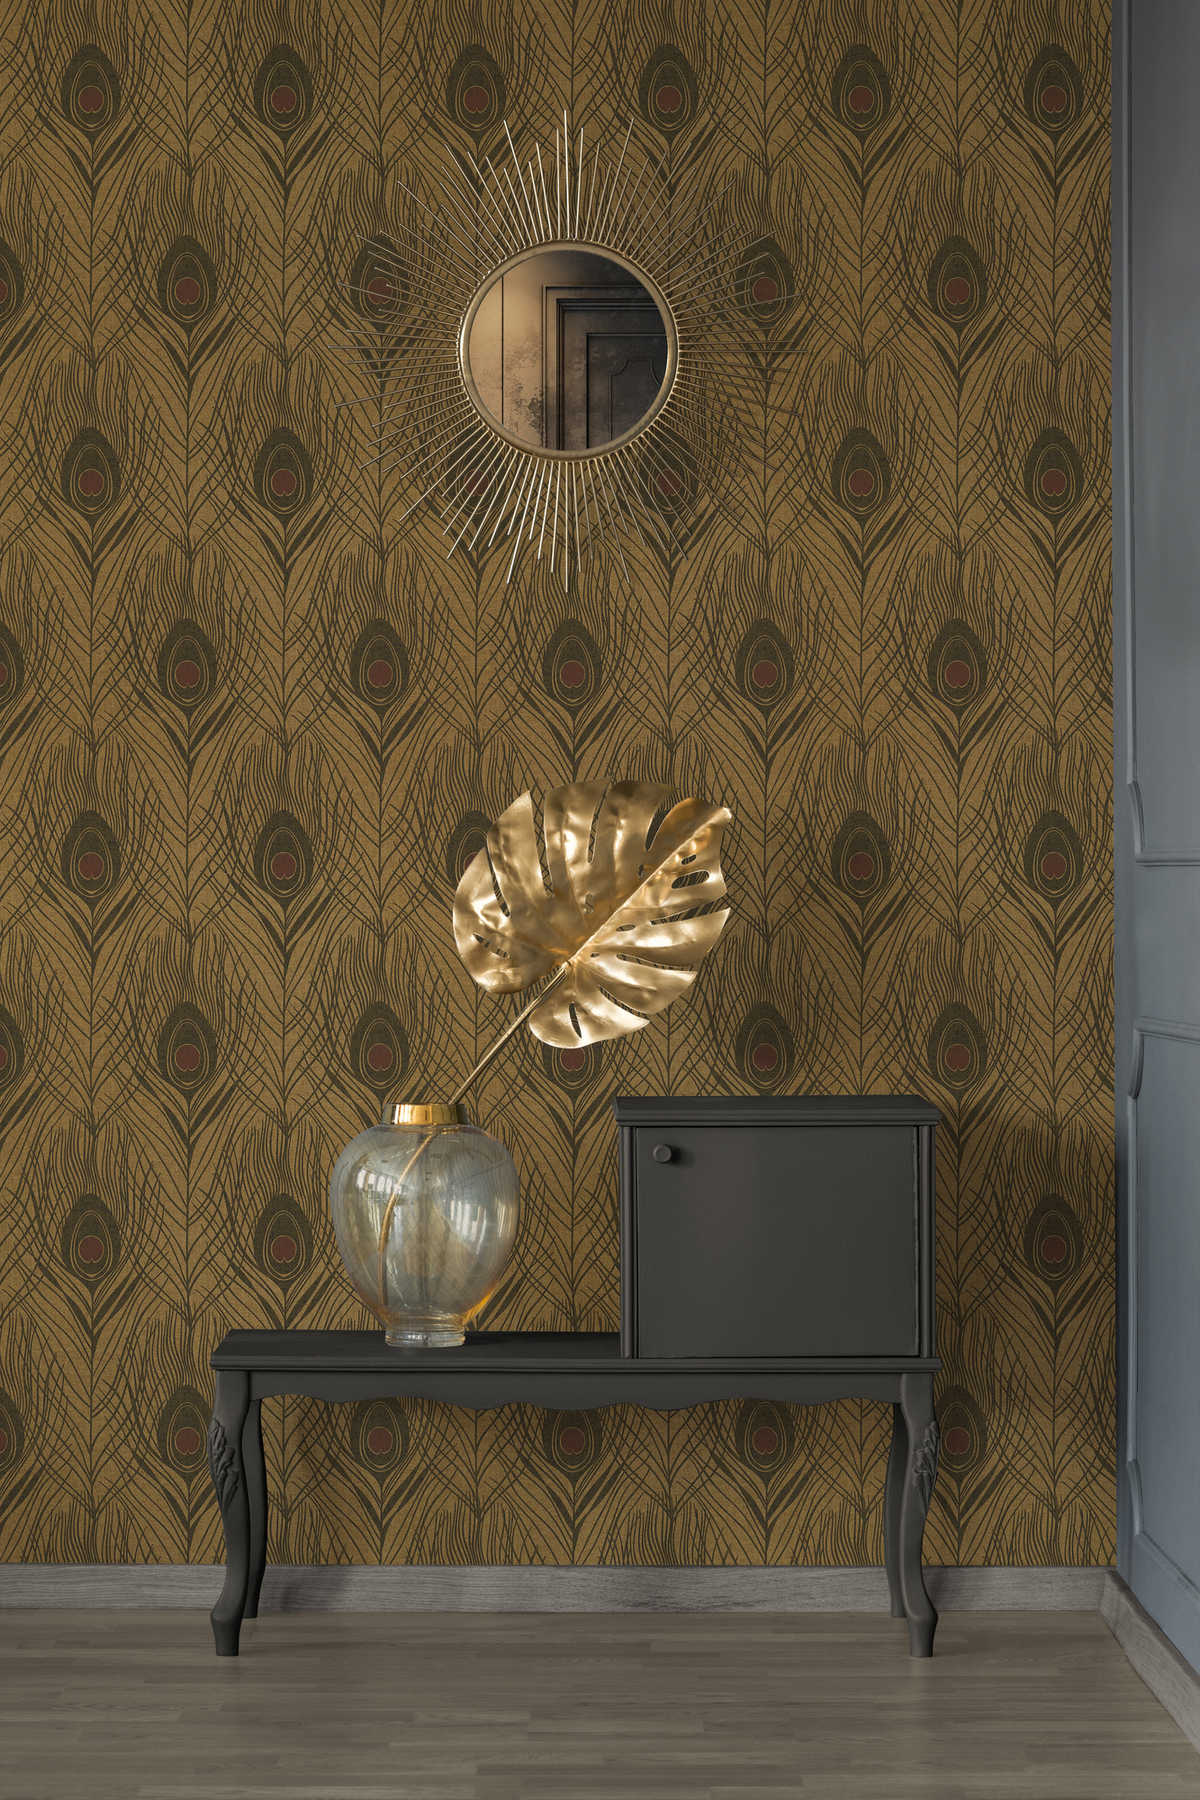             Papel pintado no tejido dorado con plumas de pavo real - negro, dorado, marrón
        